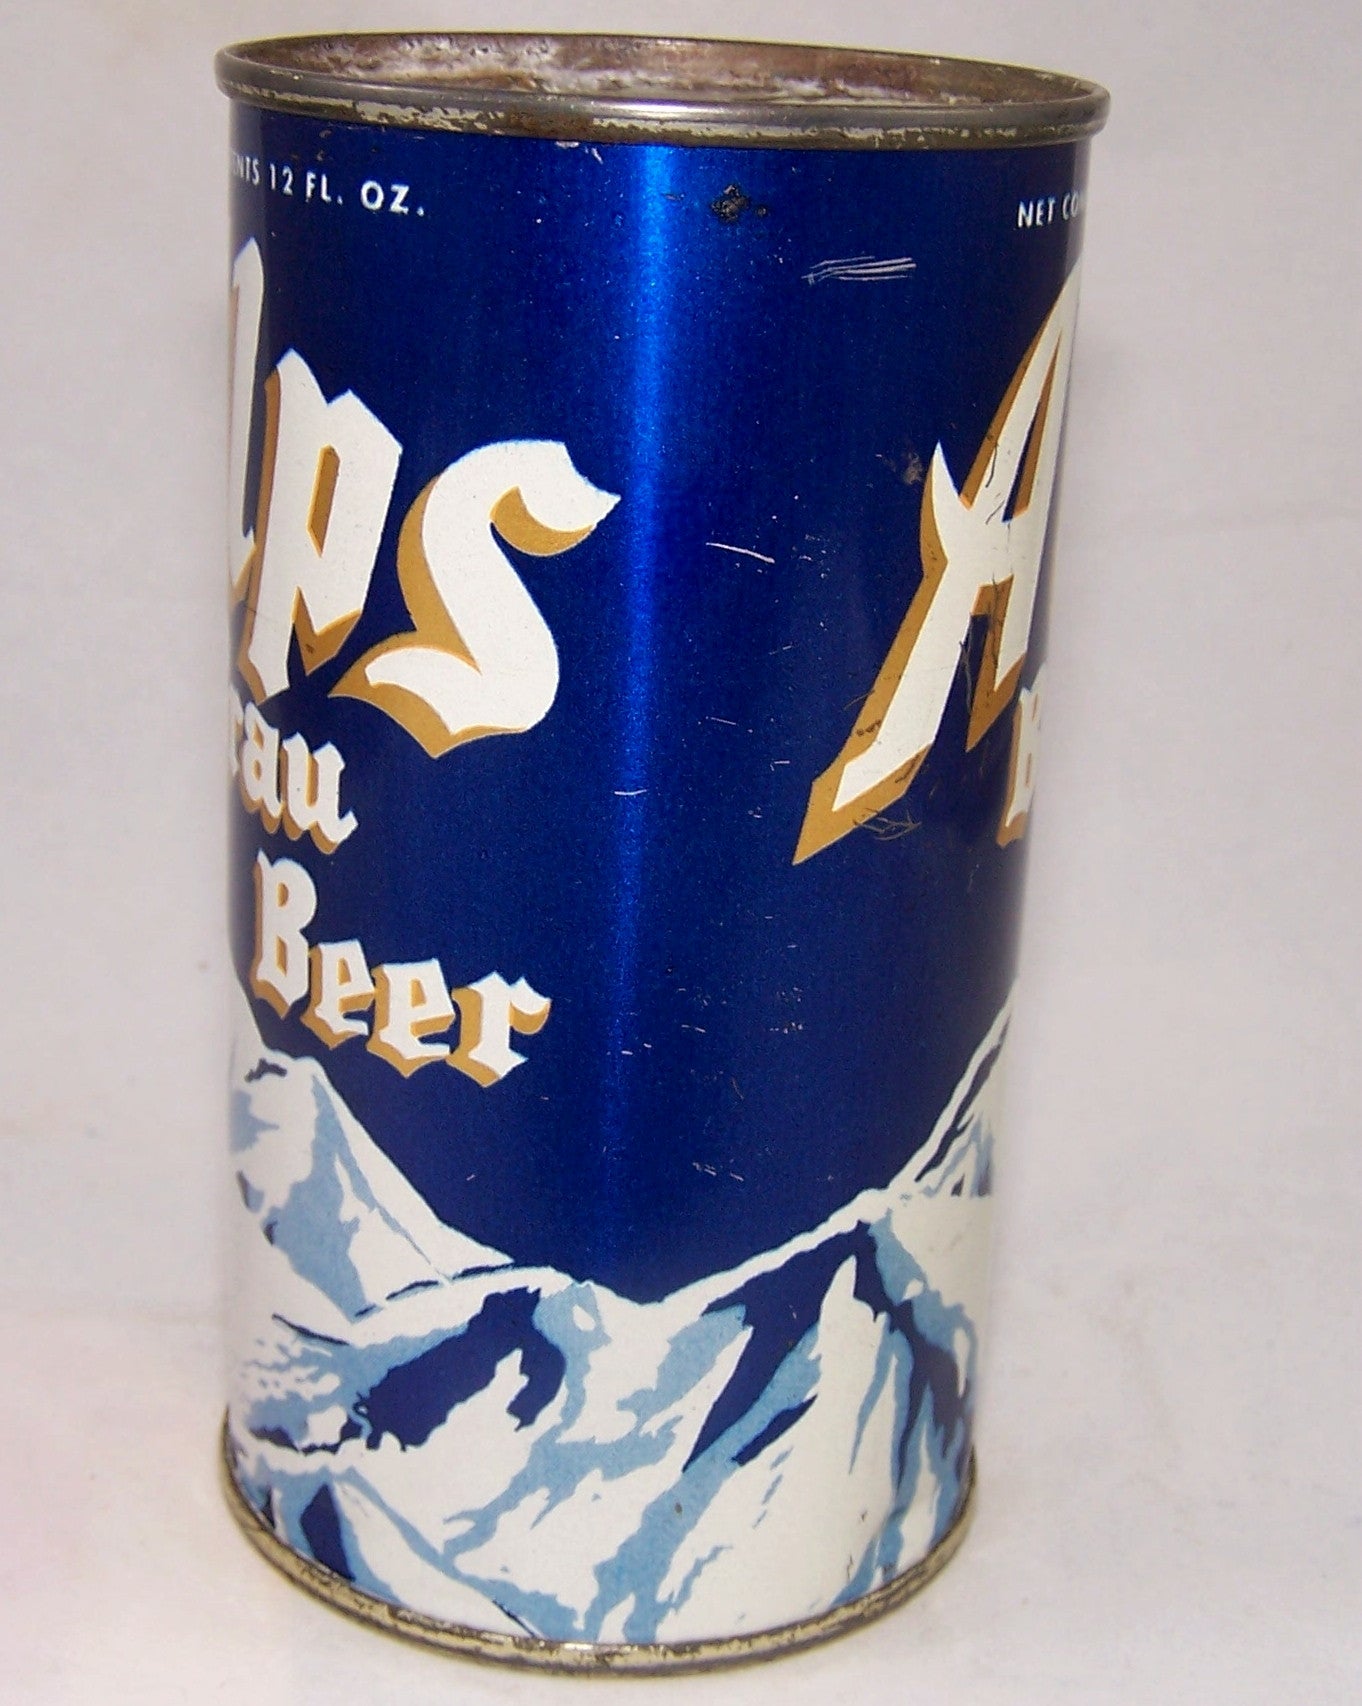 Alps Brau Beer (Gold Trim) USBC 30-07, Grade 1/1+ Sold on 05/16/16